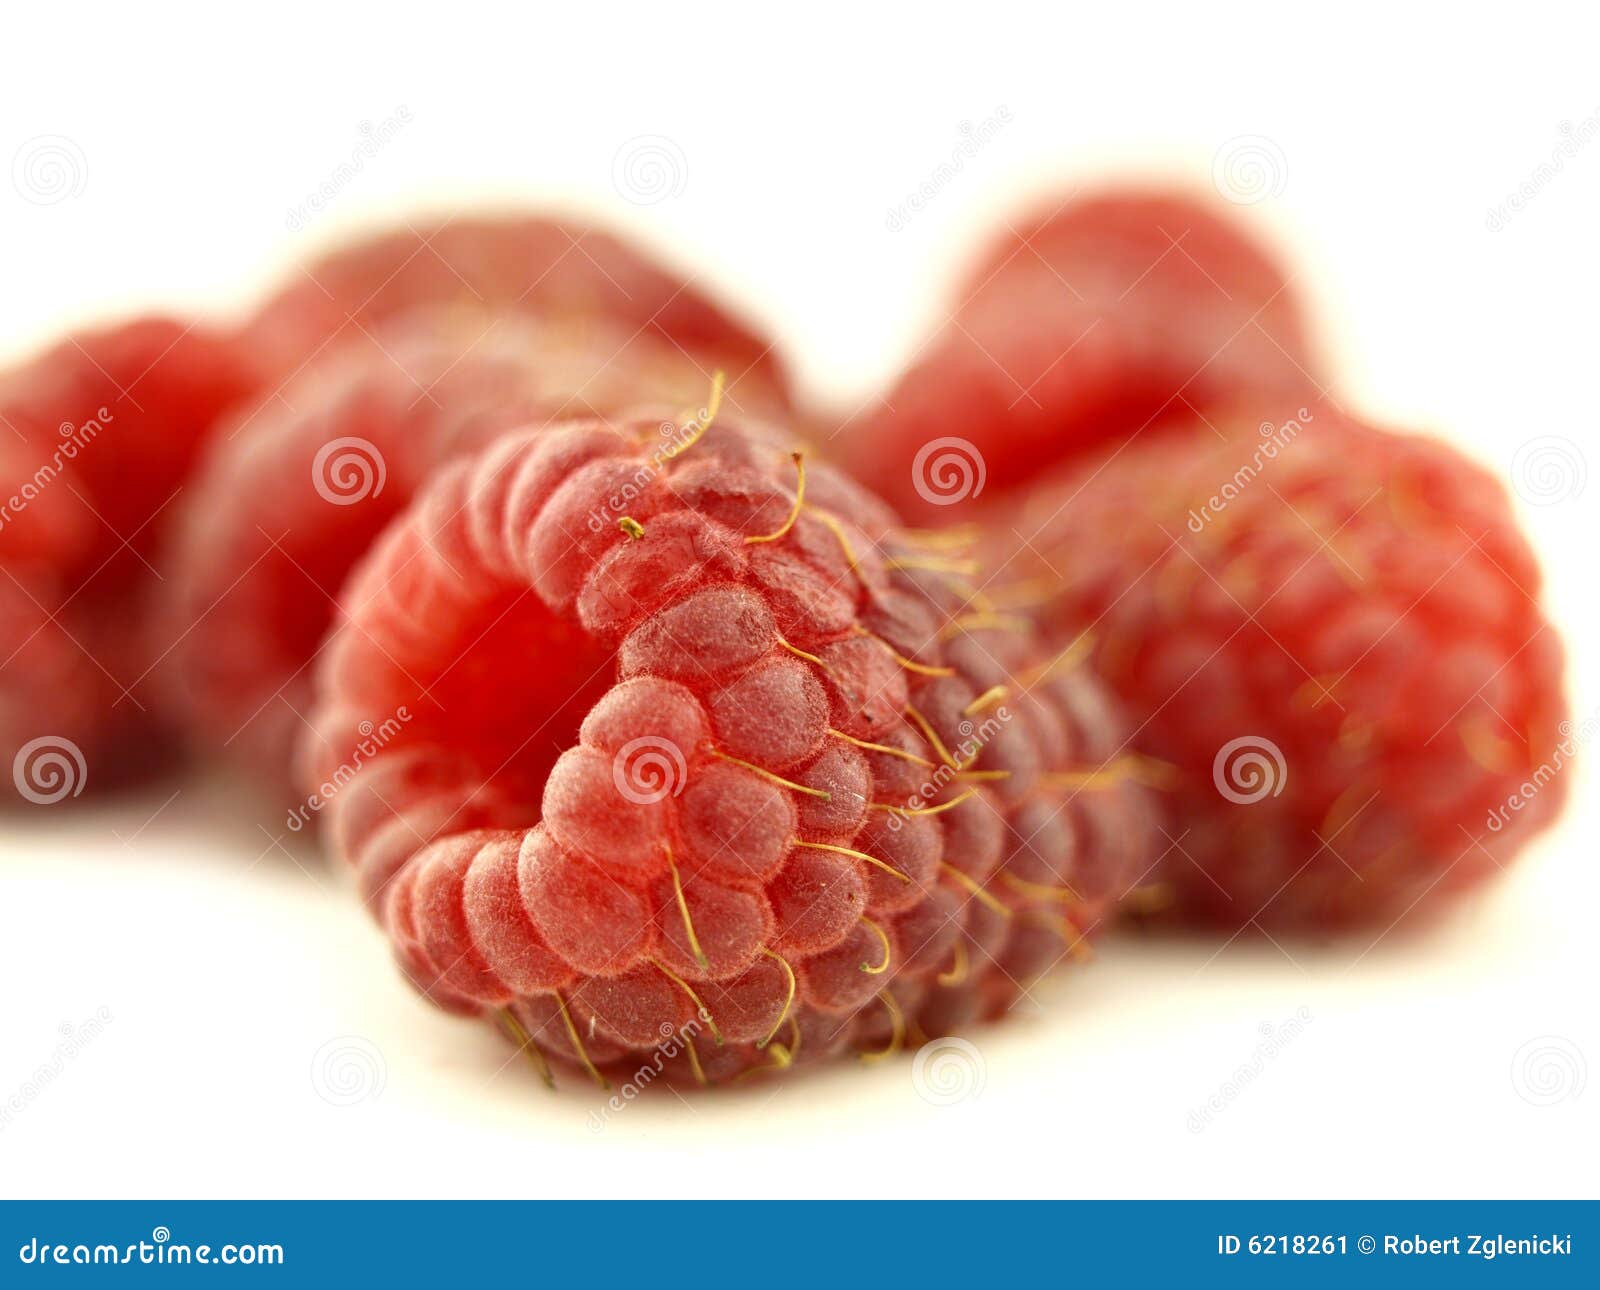 raspberry in zoom